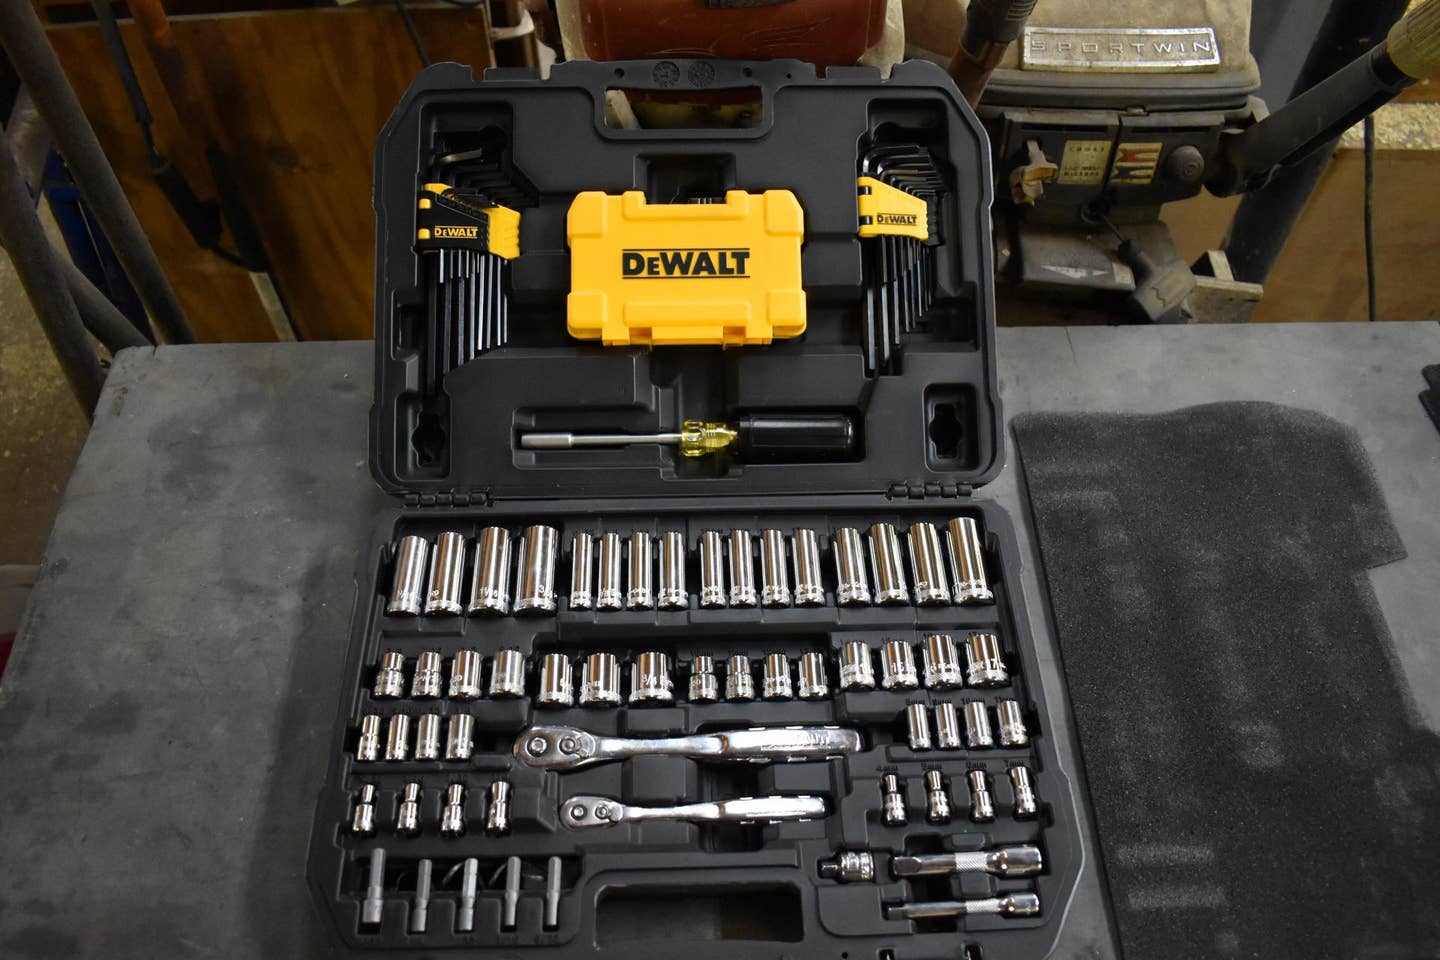 how good are dewalt hand tools?